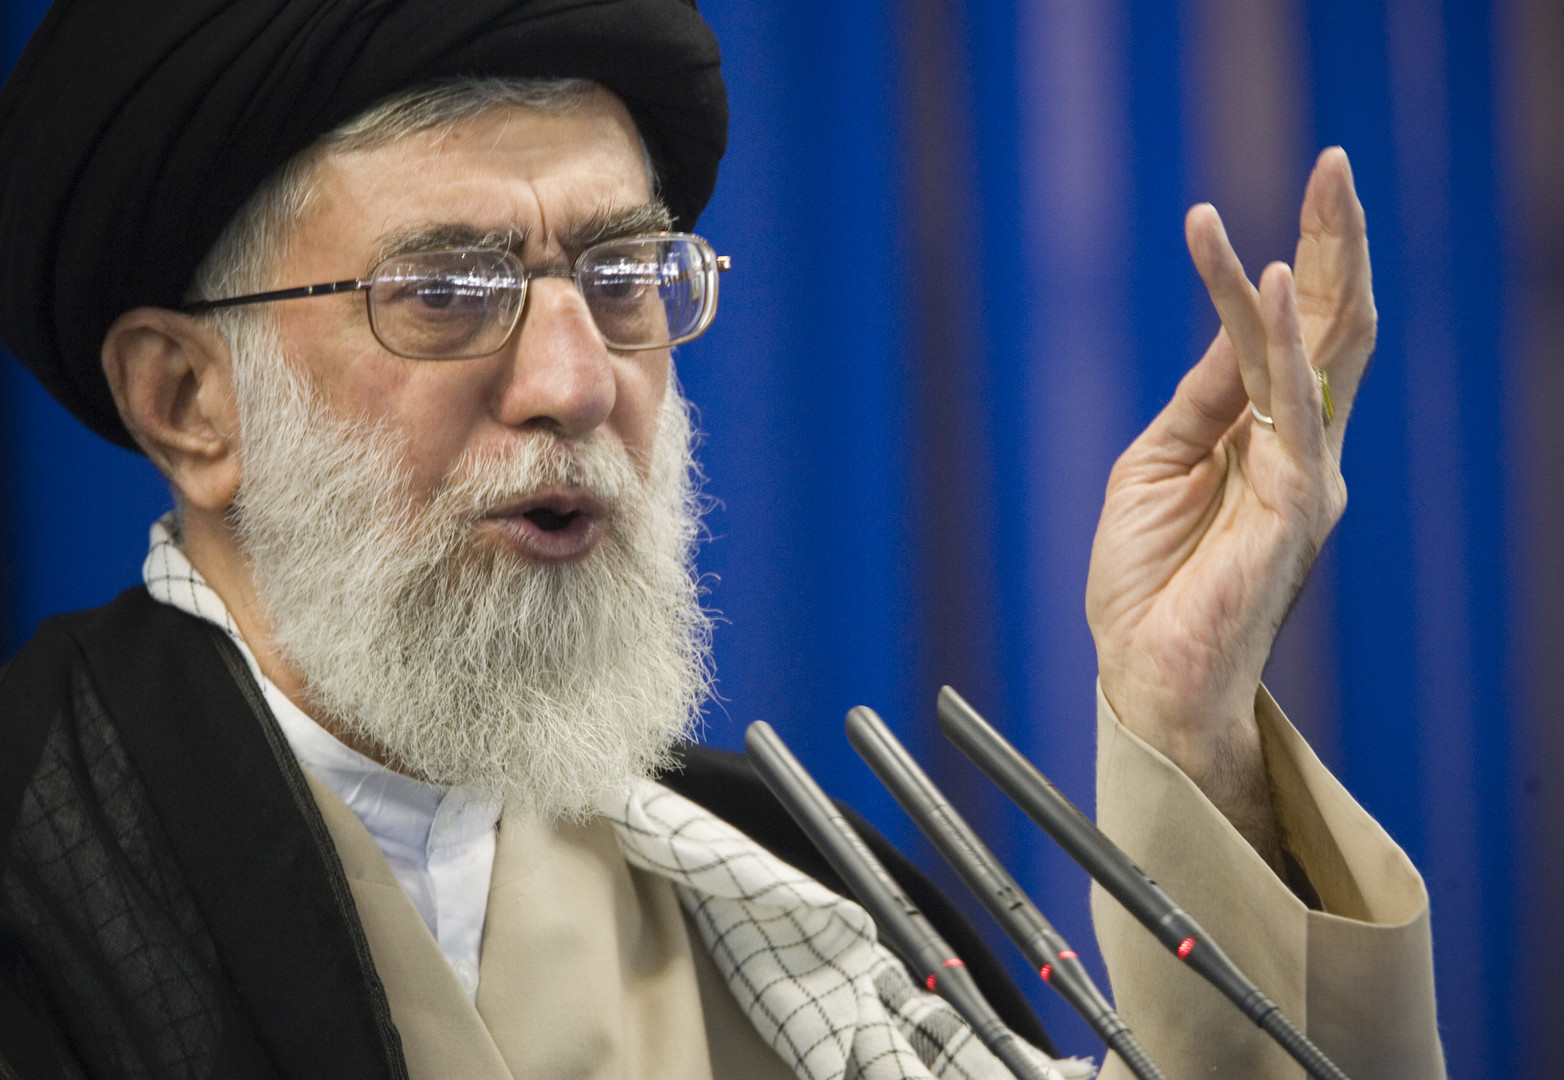   خامنئي: إيران ستواصل تقليص التزاماتها بالاتفاق النووي